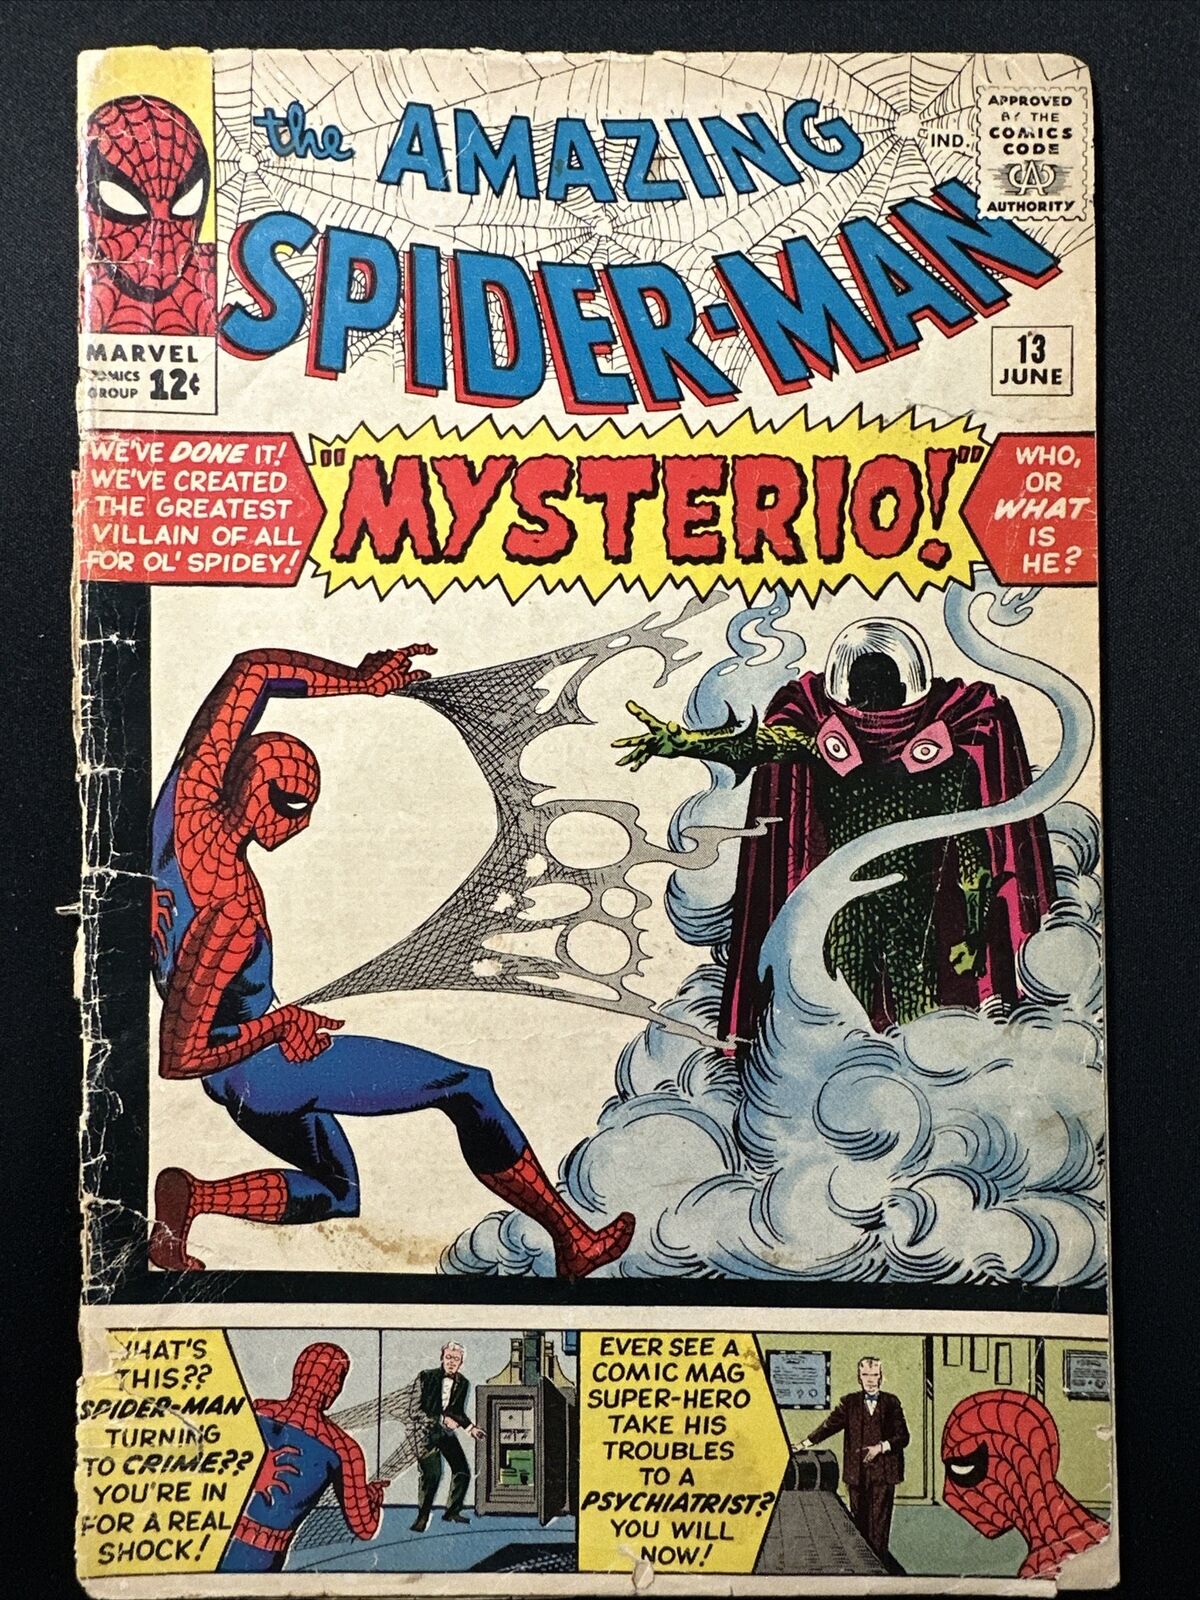 The Amazing Spider-Man #13 Marvel Comics 1st Print Silver Age 1964 Fair